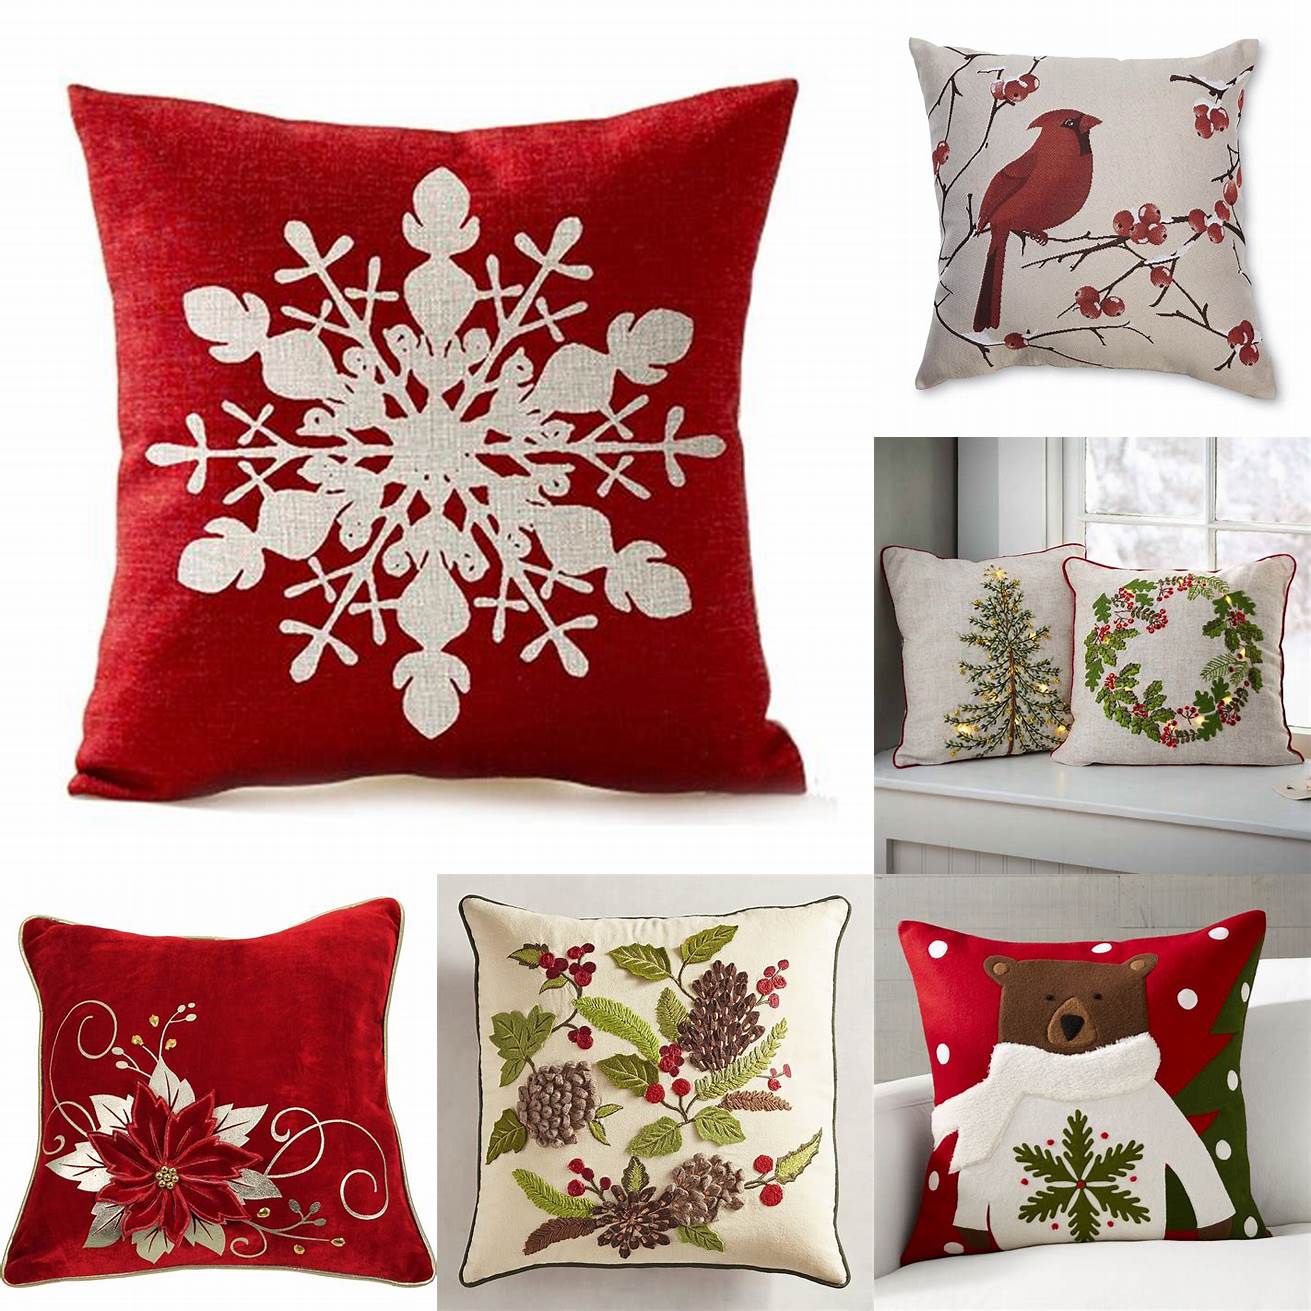 Seasonal Pillows